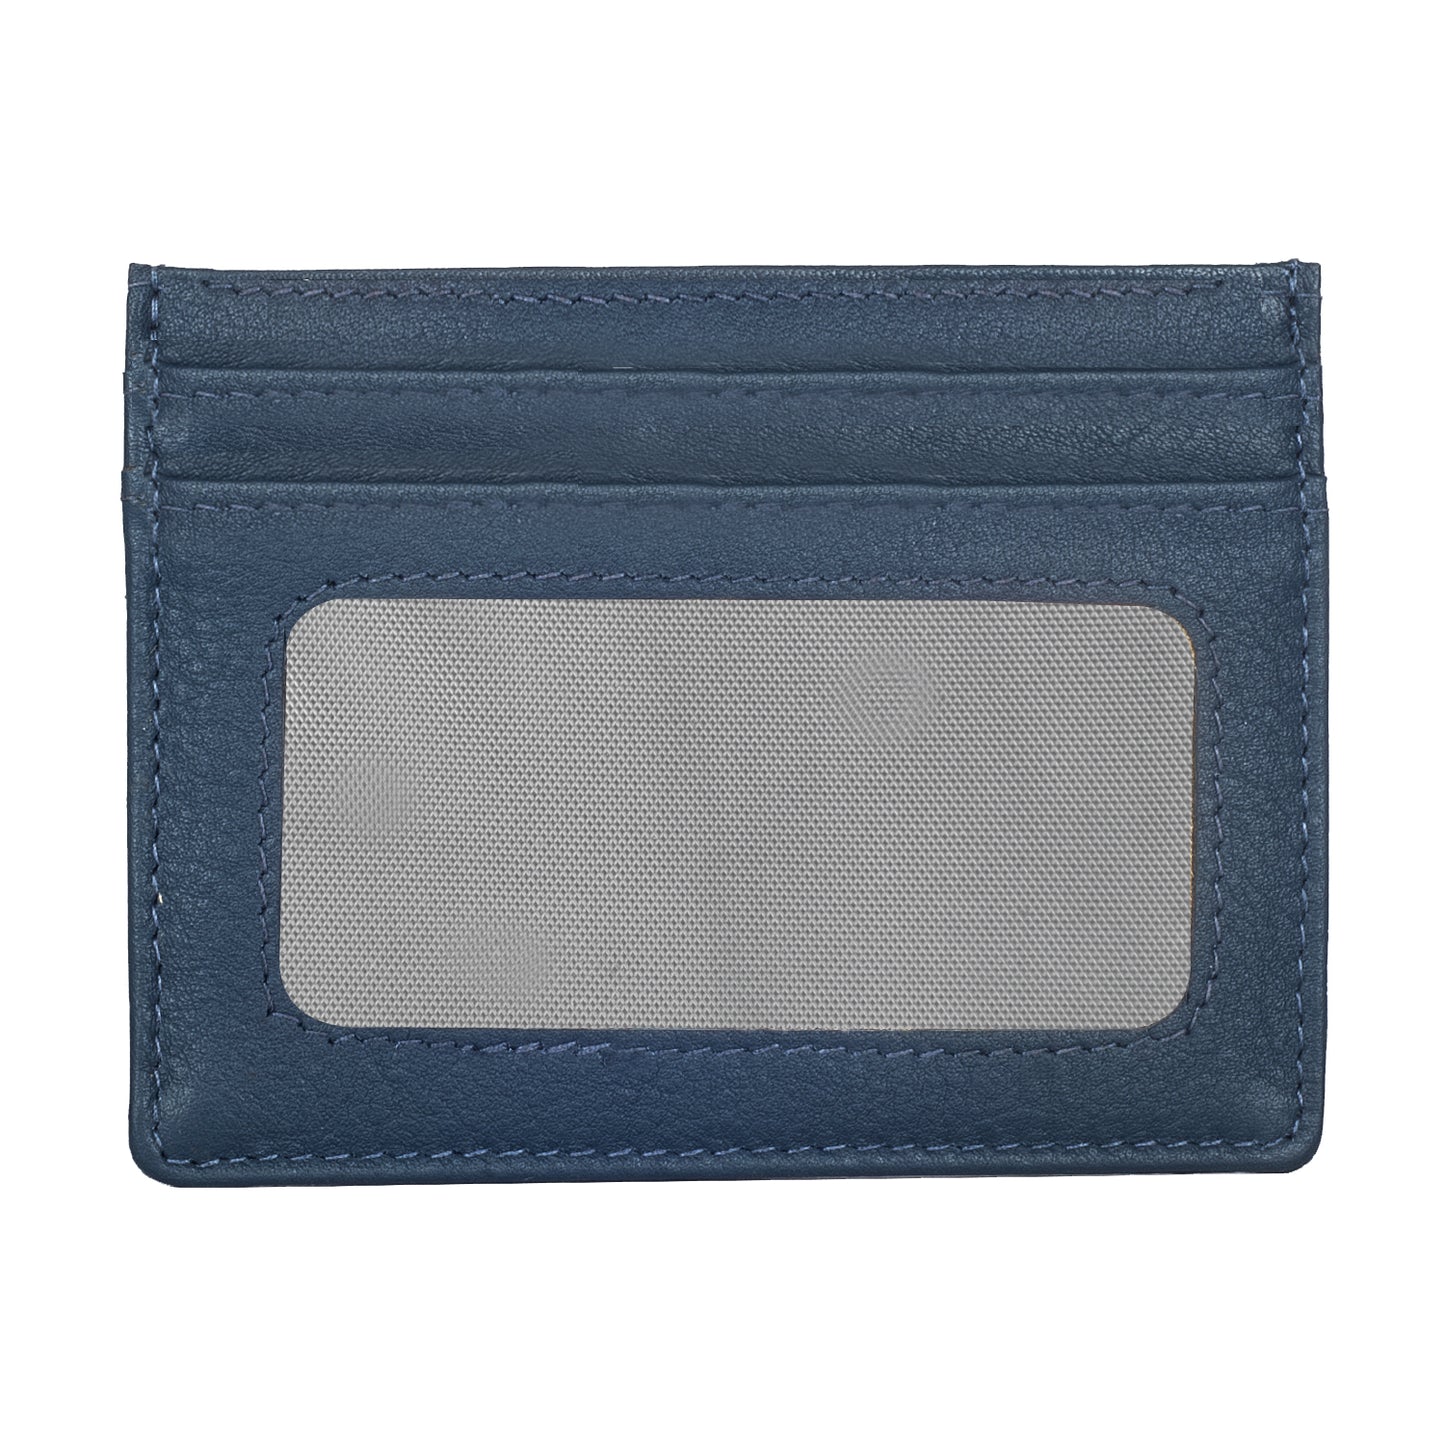 Calfnero Genuine Leather Card Case (1044-Navy)